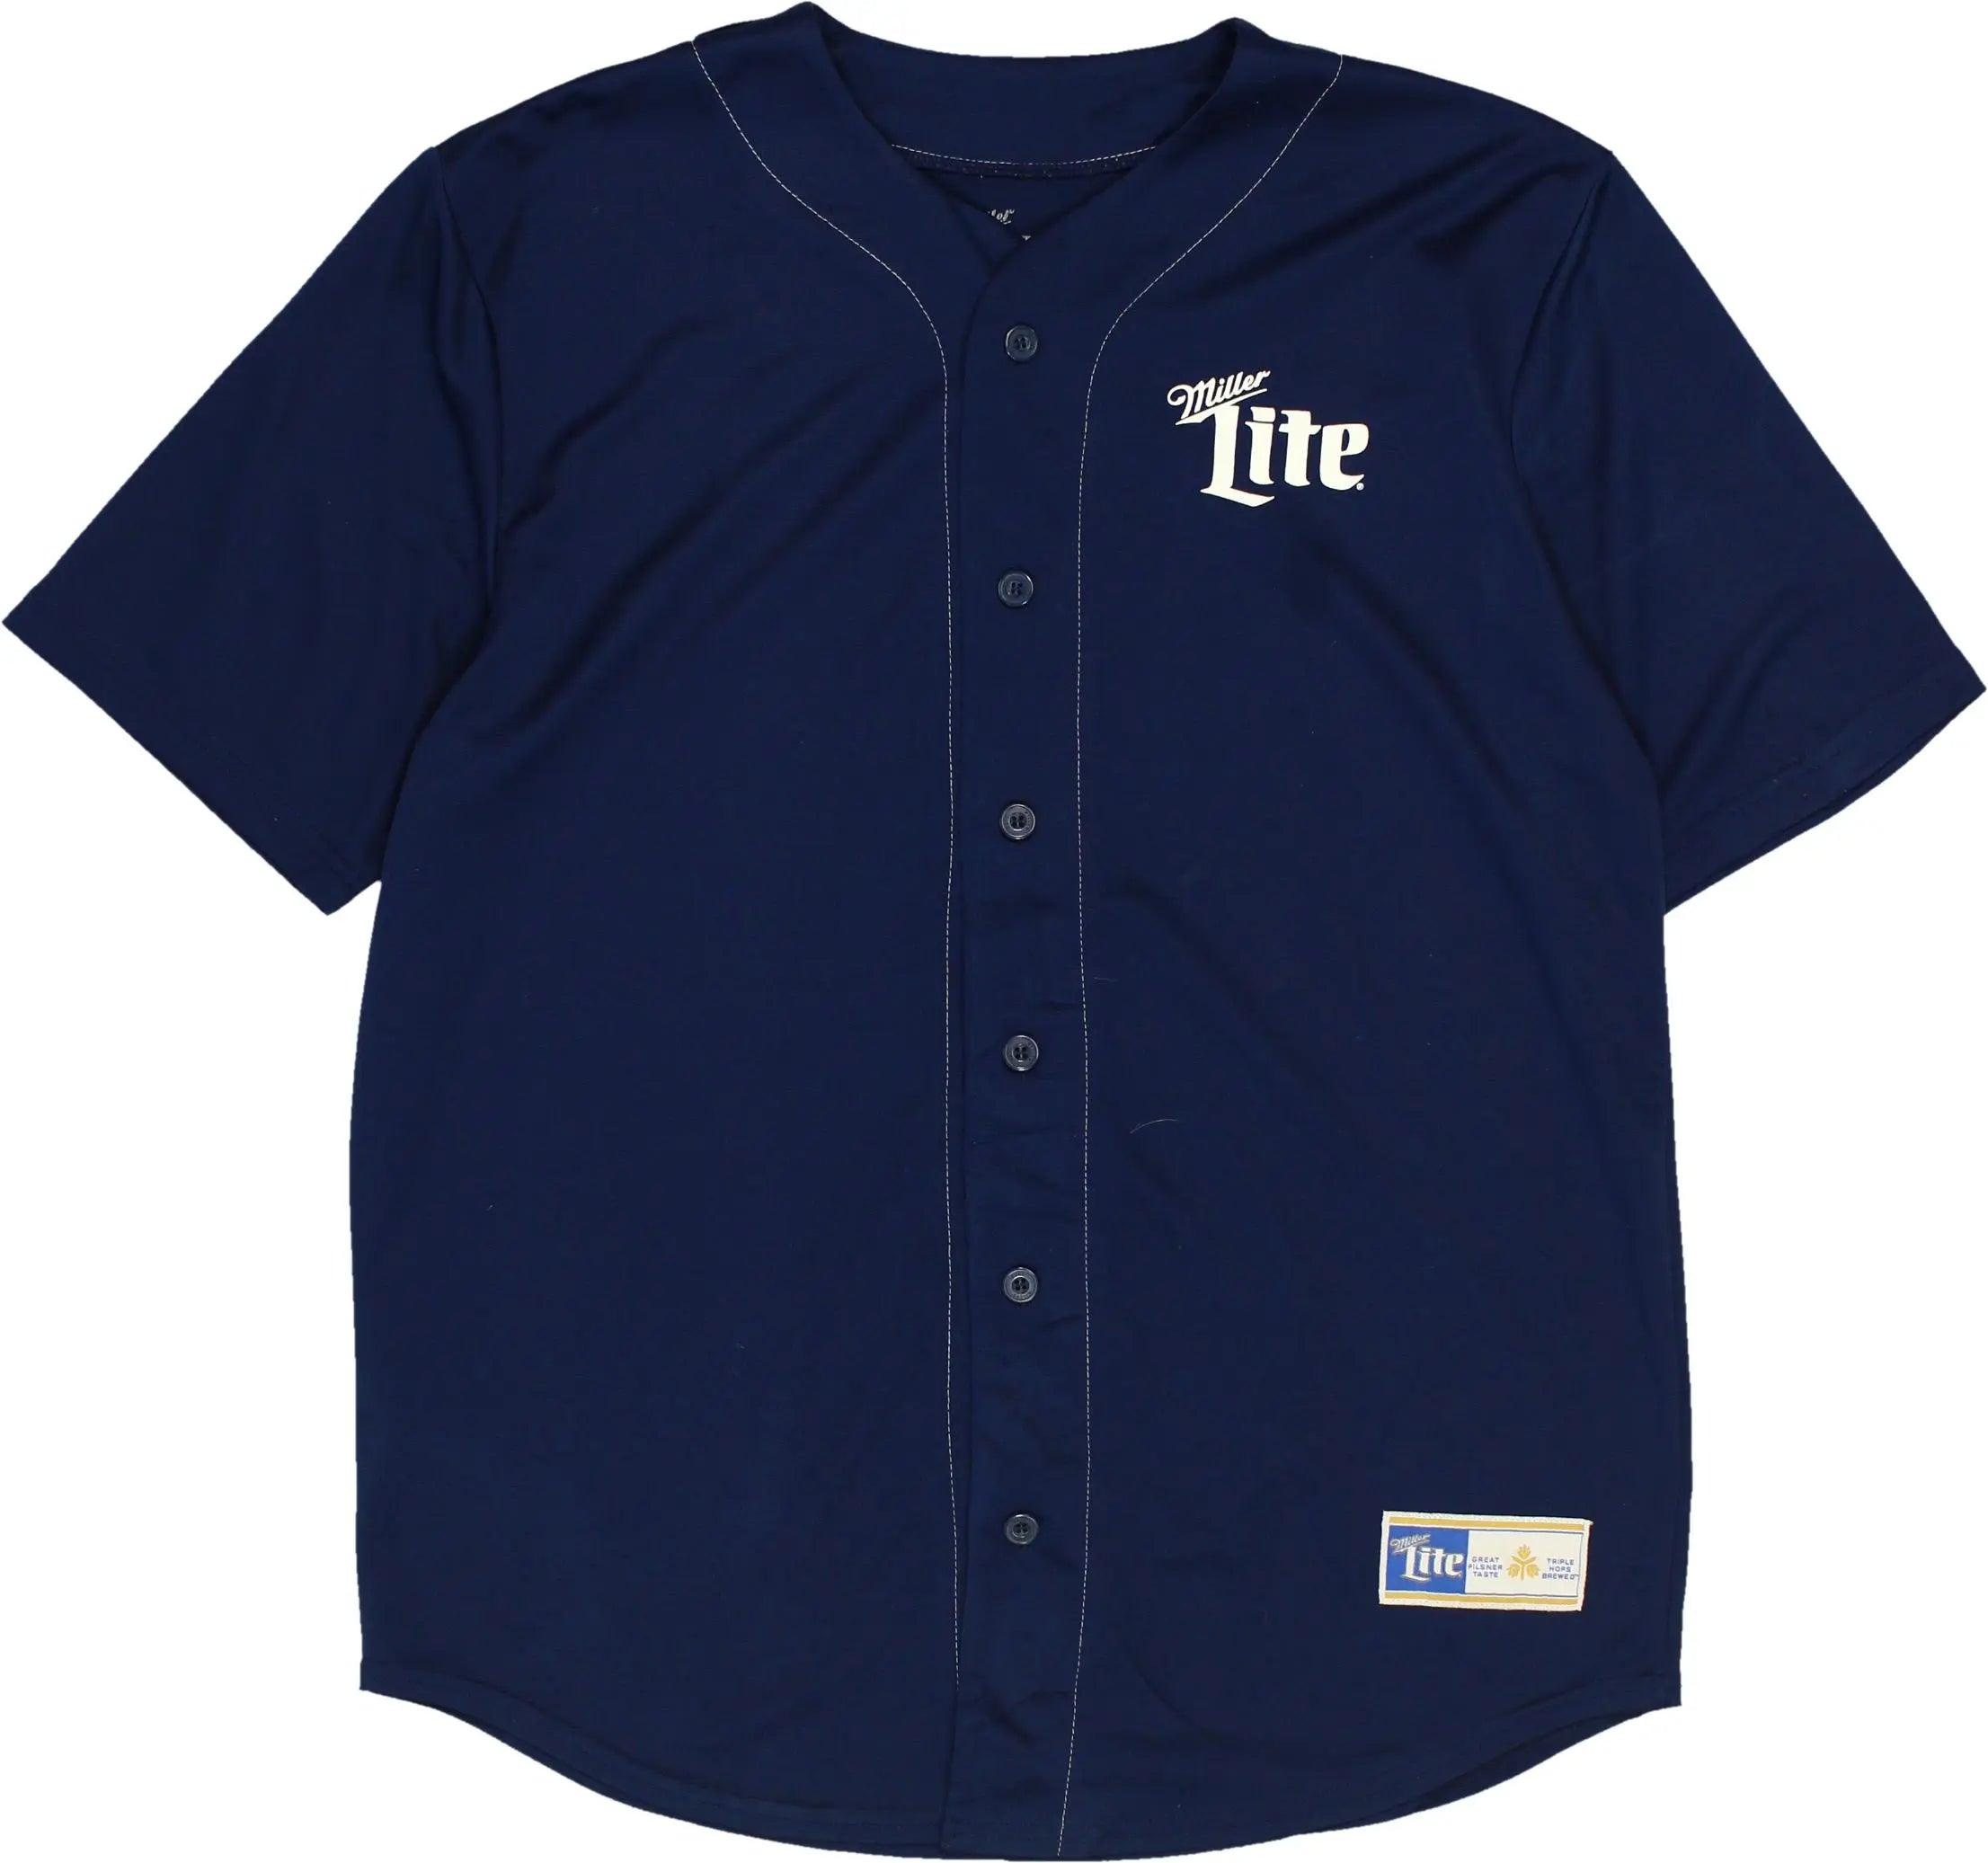 Miller Lite - Baseball Shirt- ThriftTale.com - Vintage and second handclothing